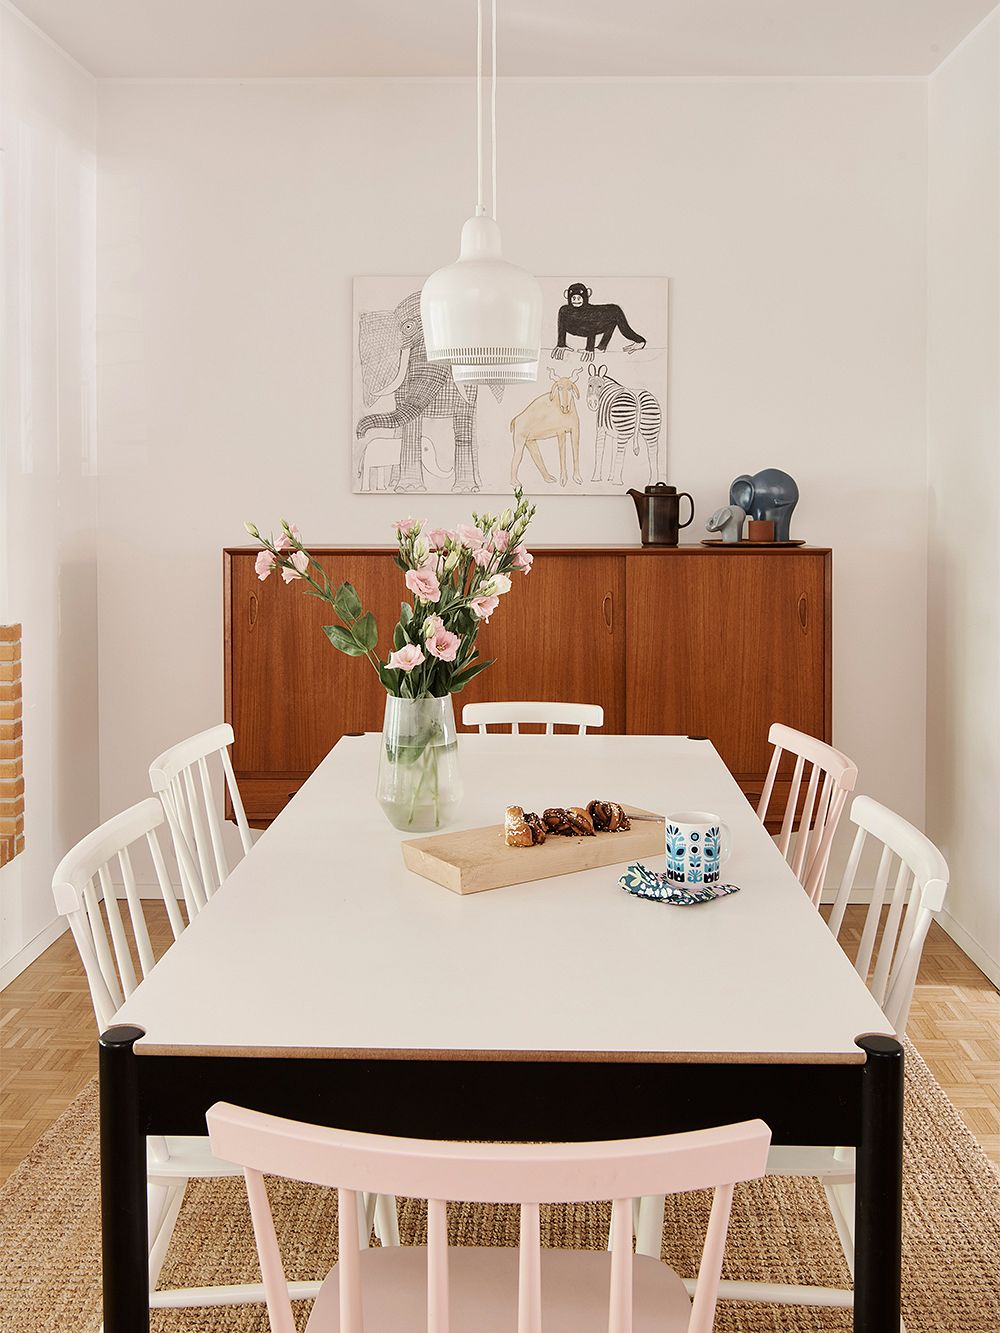 An image of Asli Ufacik's home: the dining room decor.